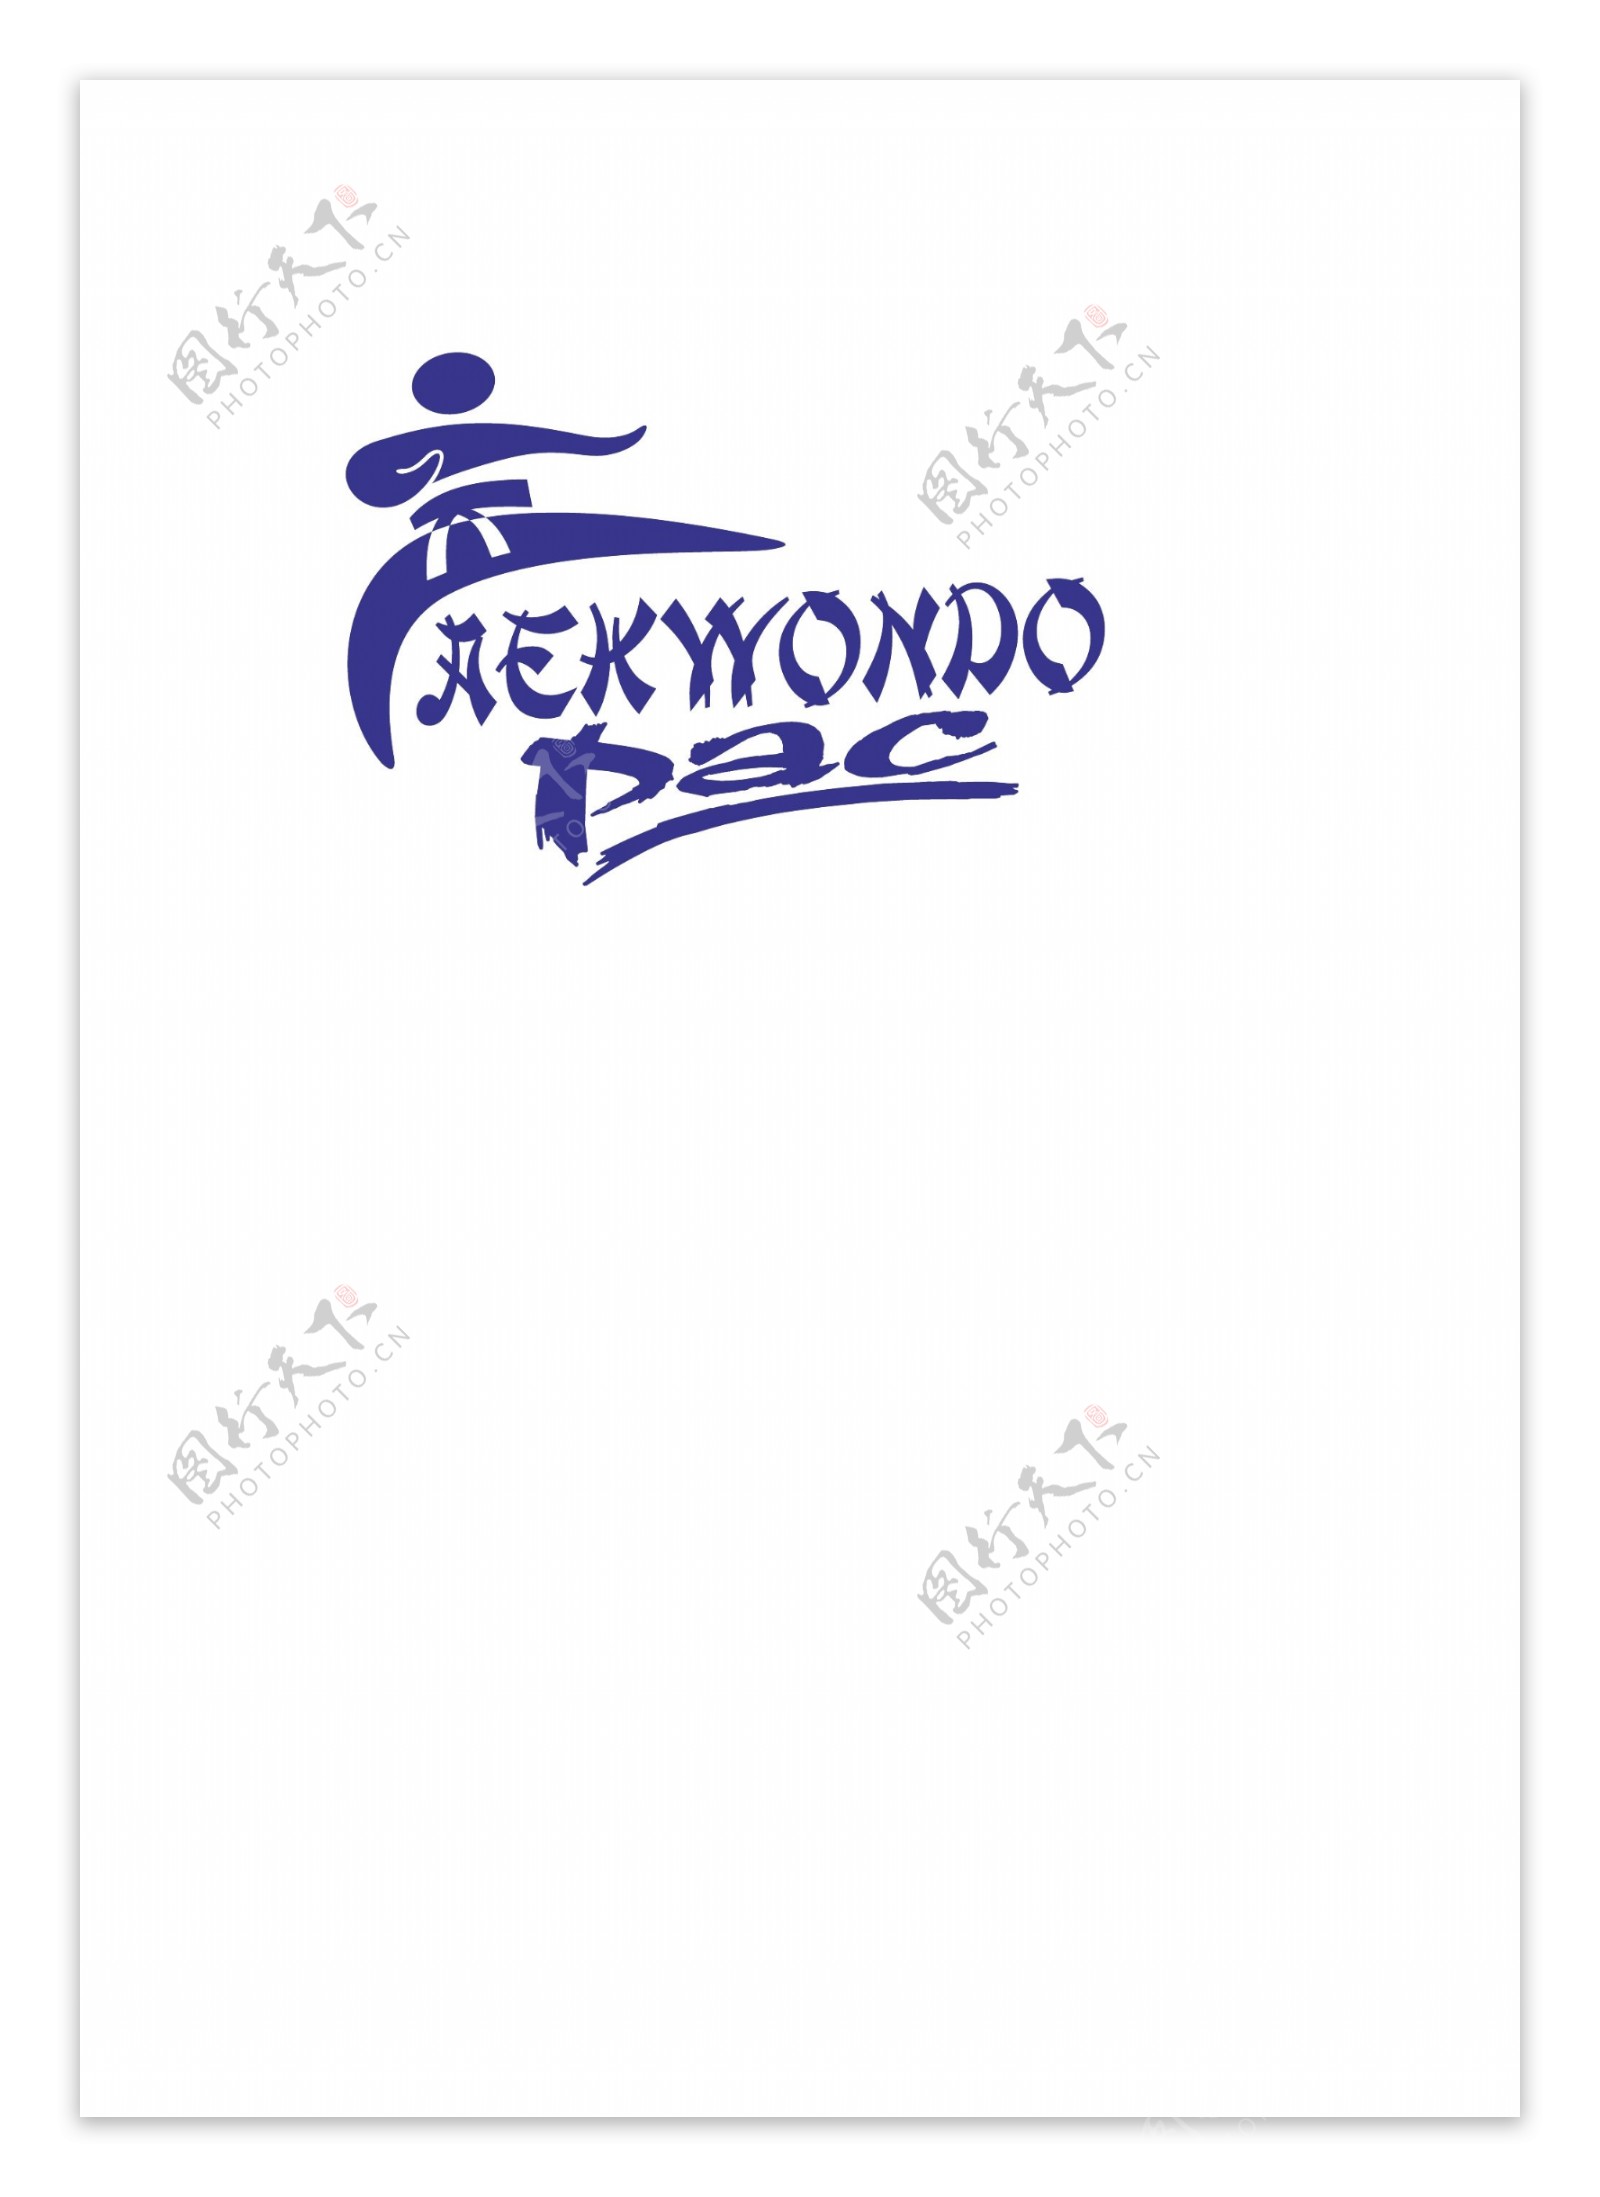 TaekwondoPaclogo设计欣赏TaekwondoPac体育LOGO下载标志设计欣赏